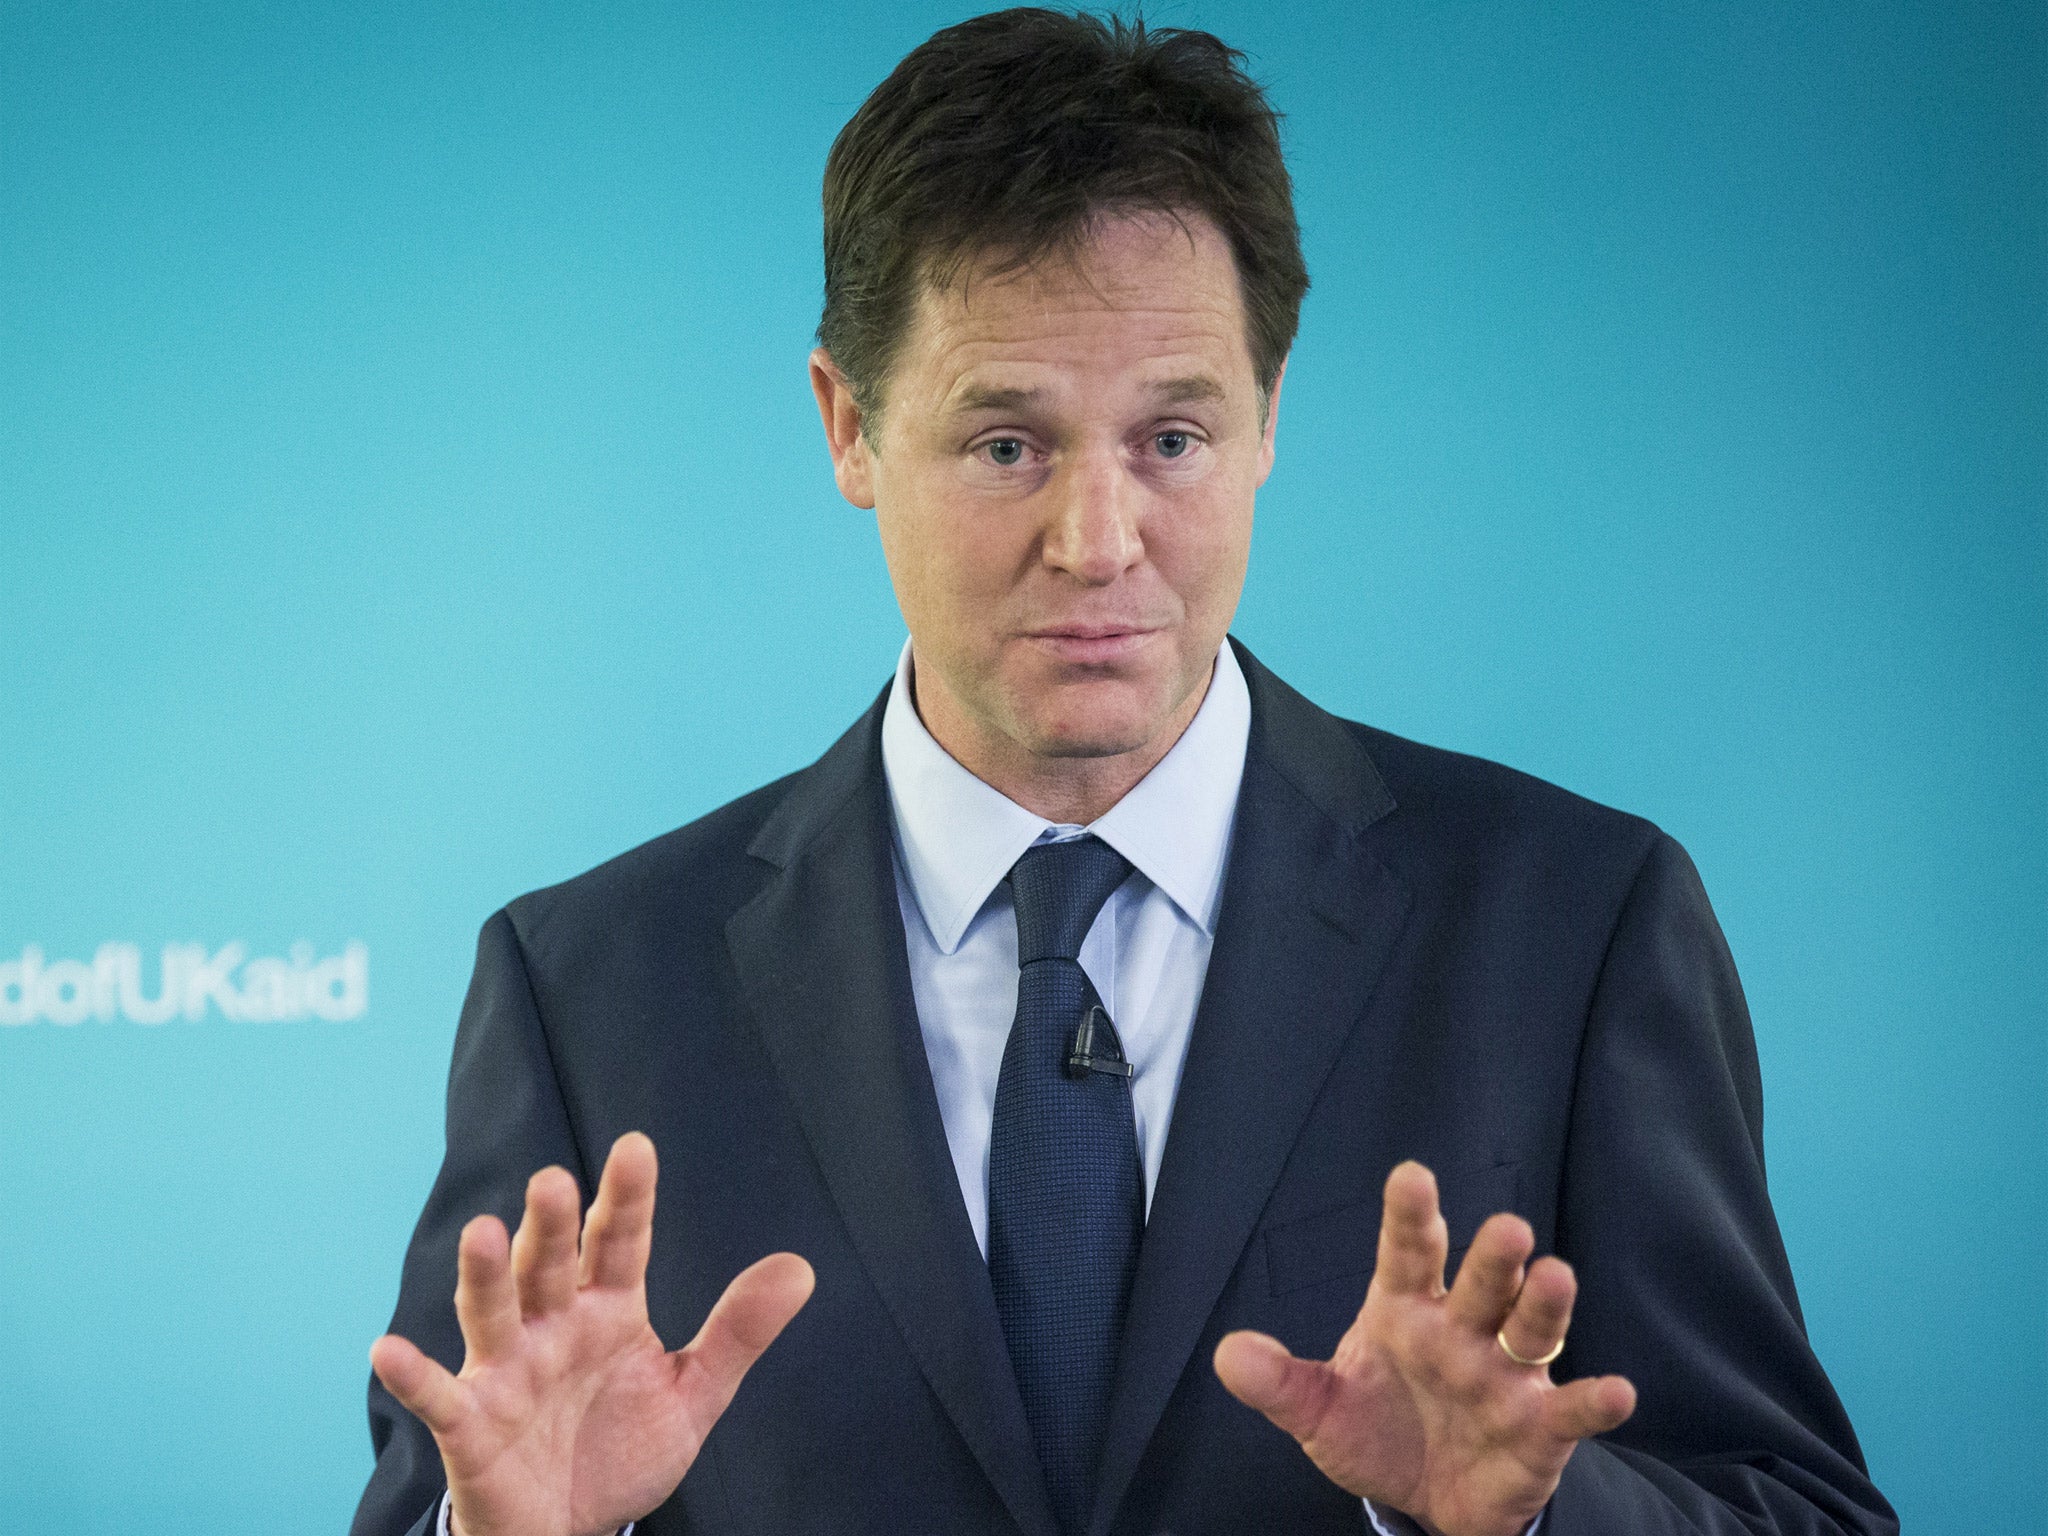 Nick Clegg giving a speech on international development in London on Wednesday